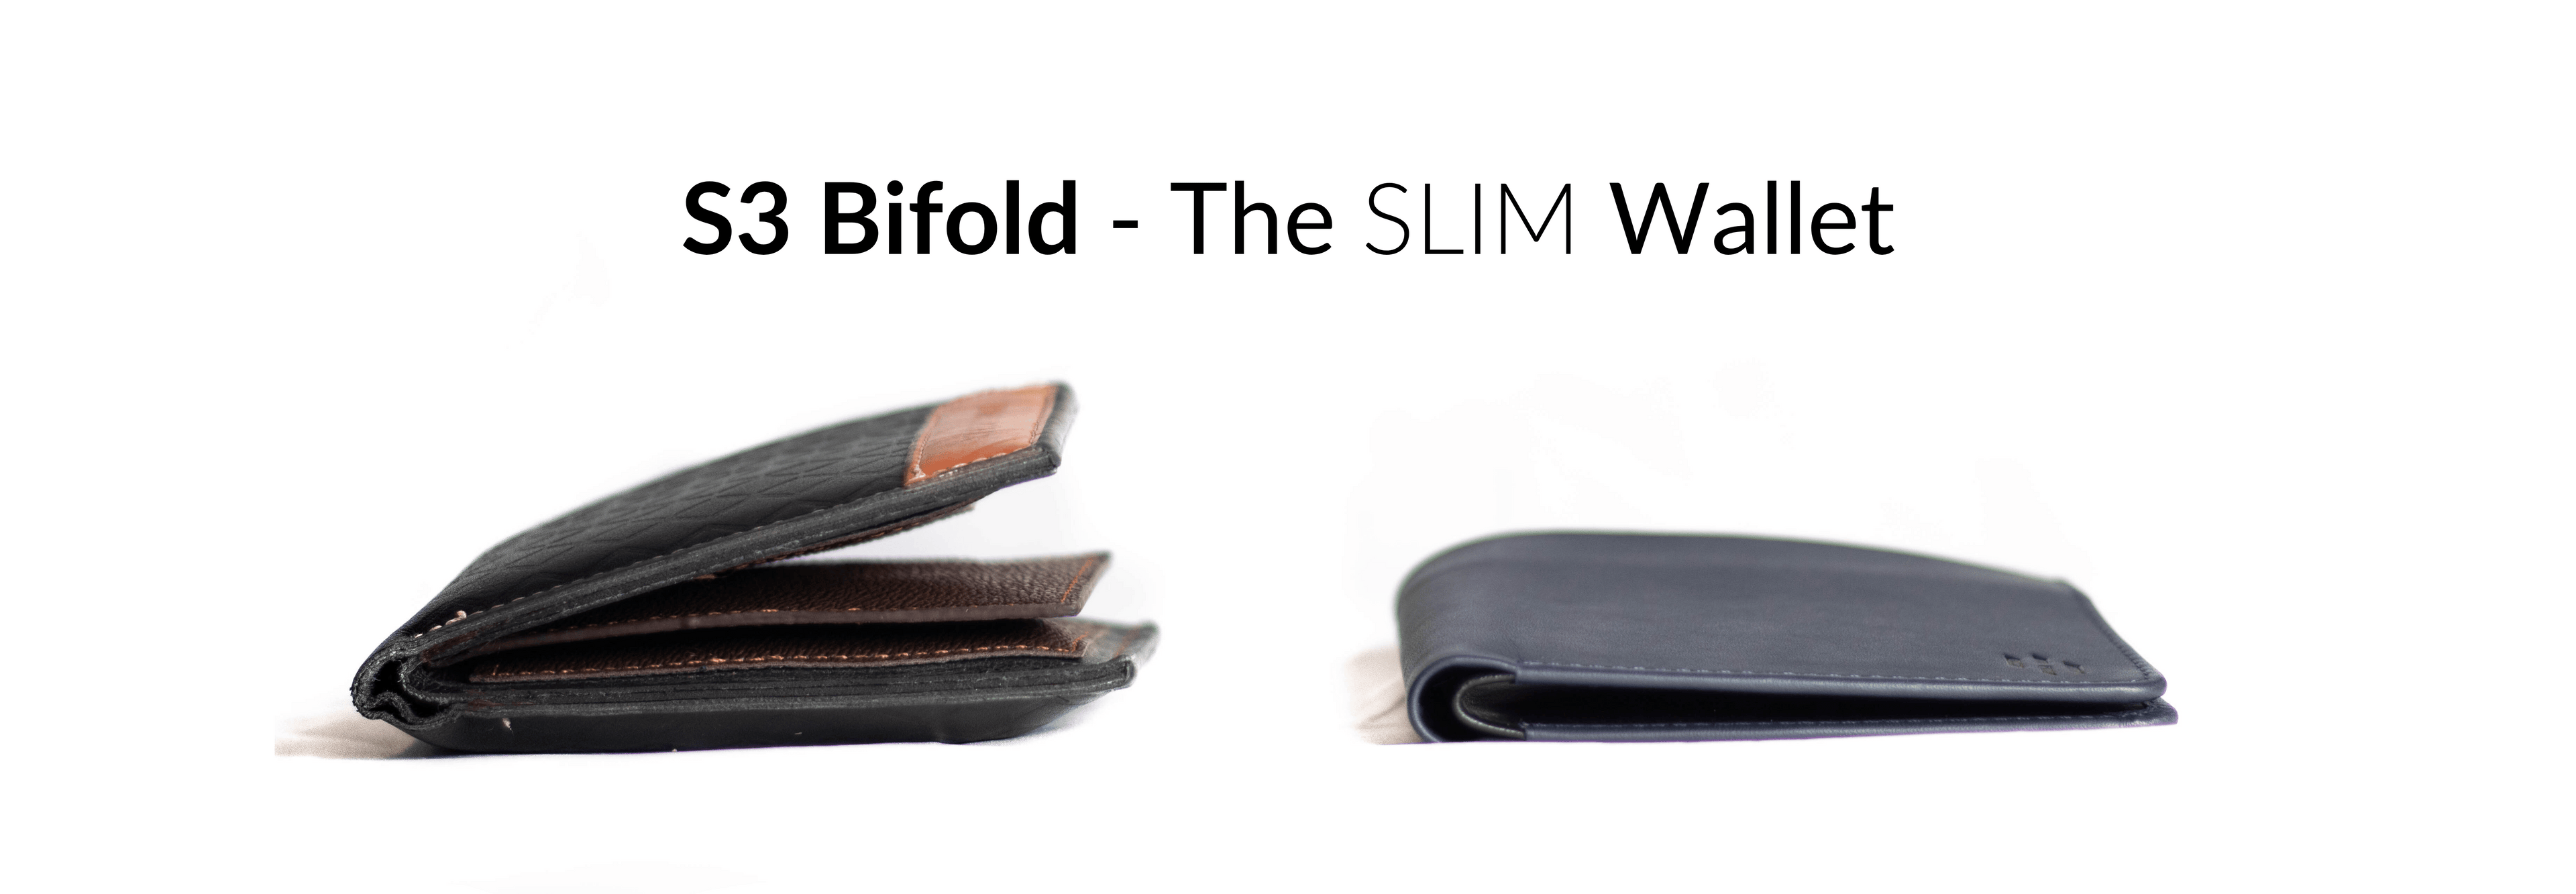 slim leather wallet in Pakistan home 3